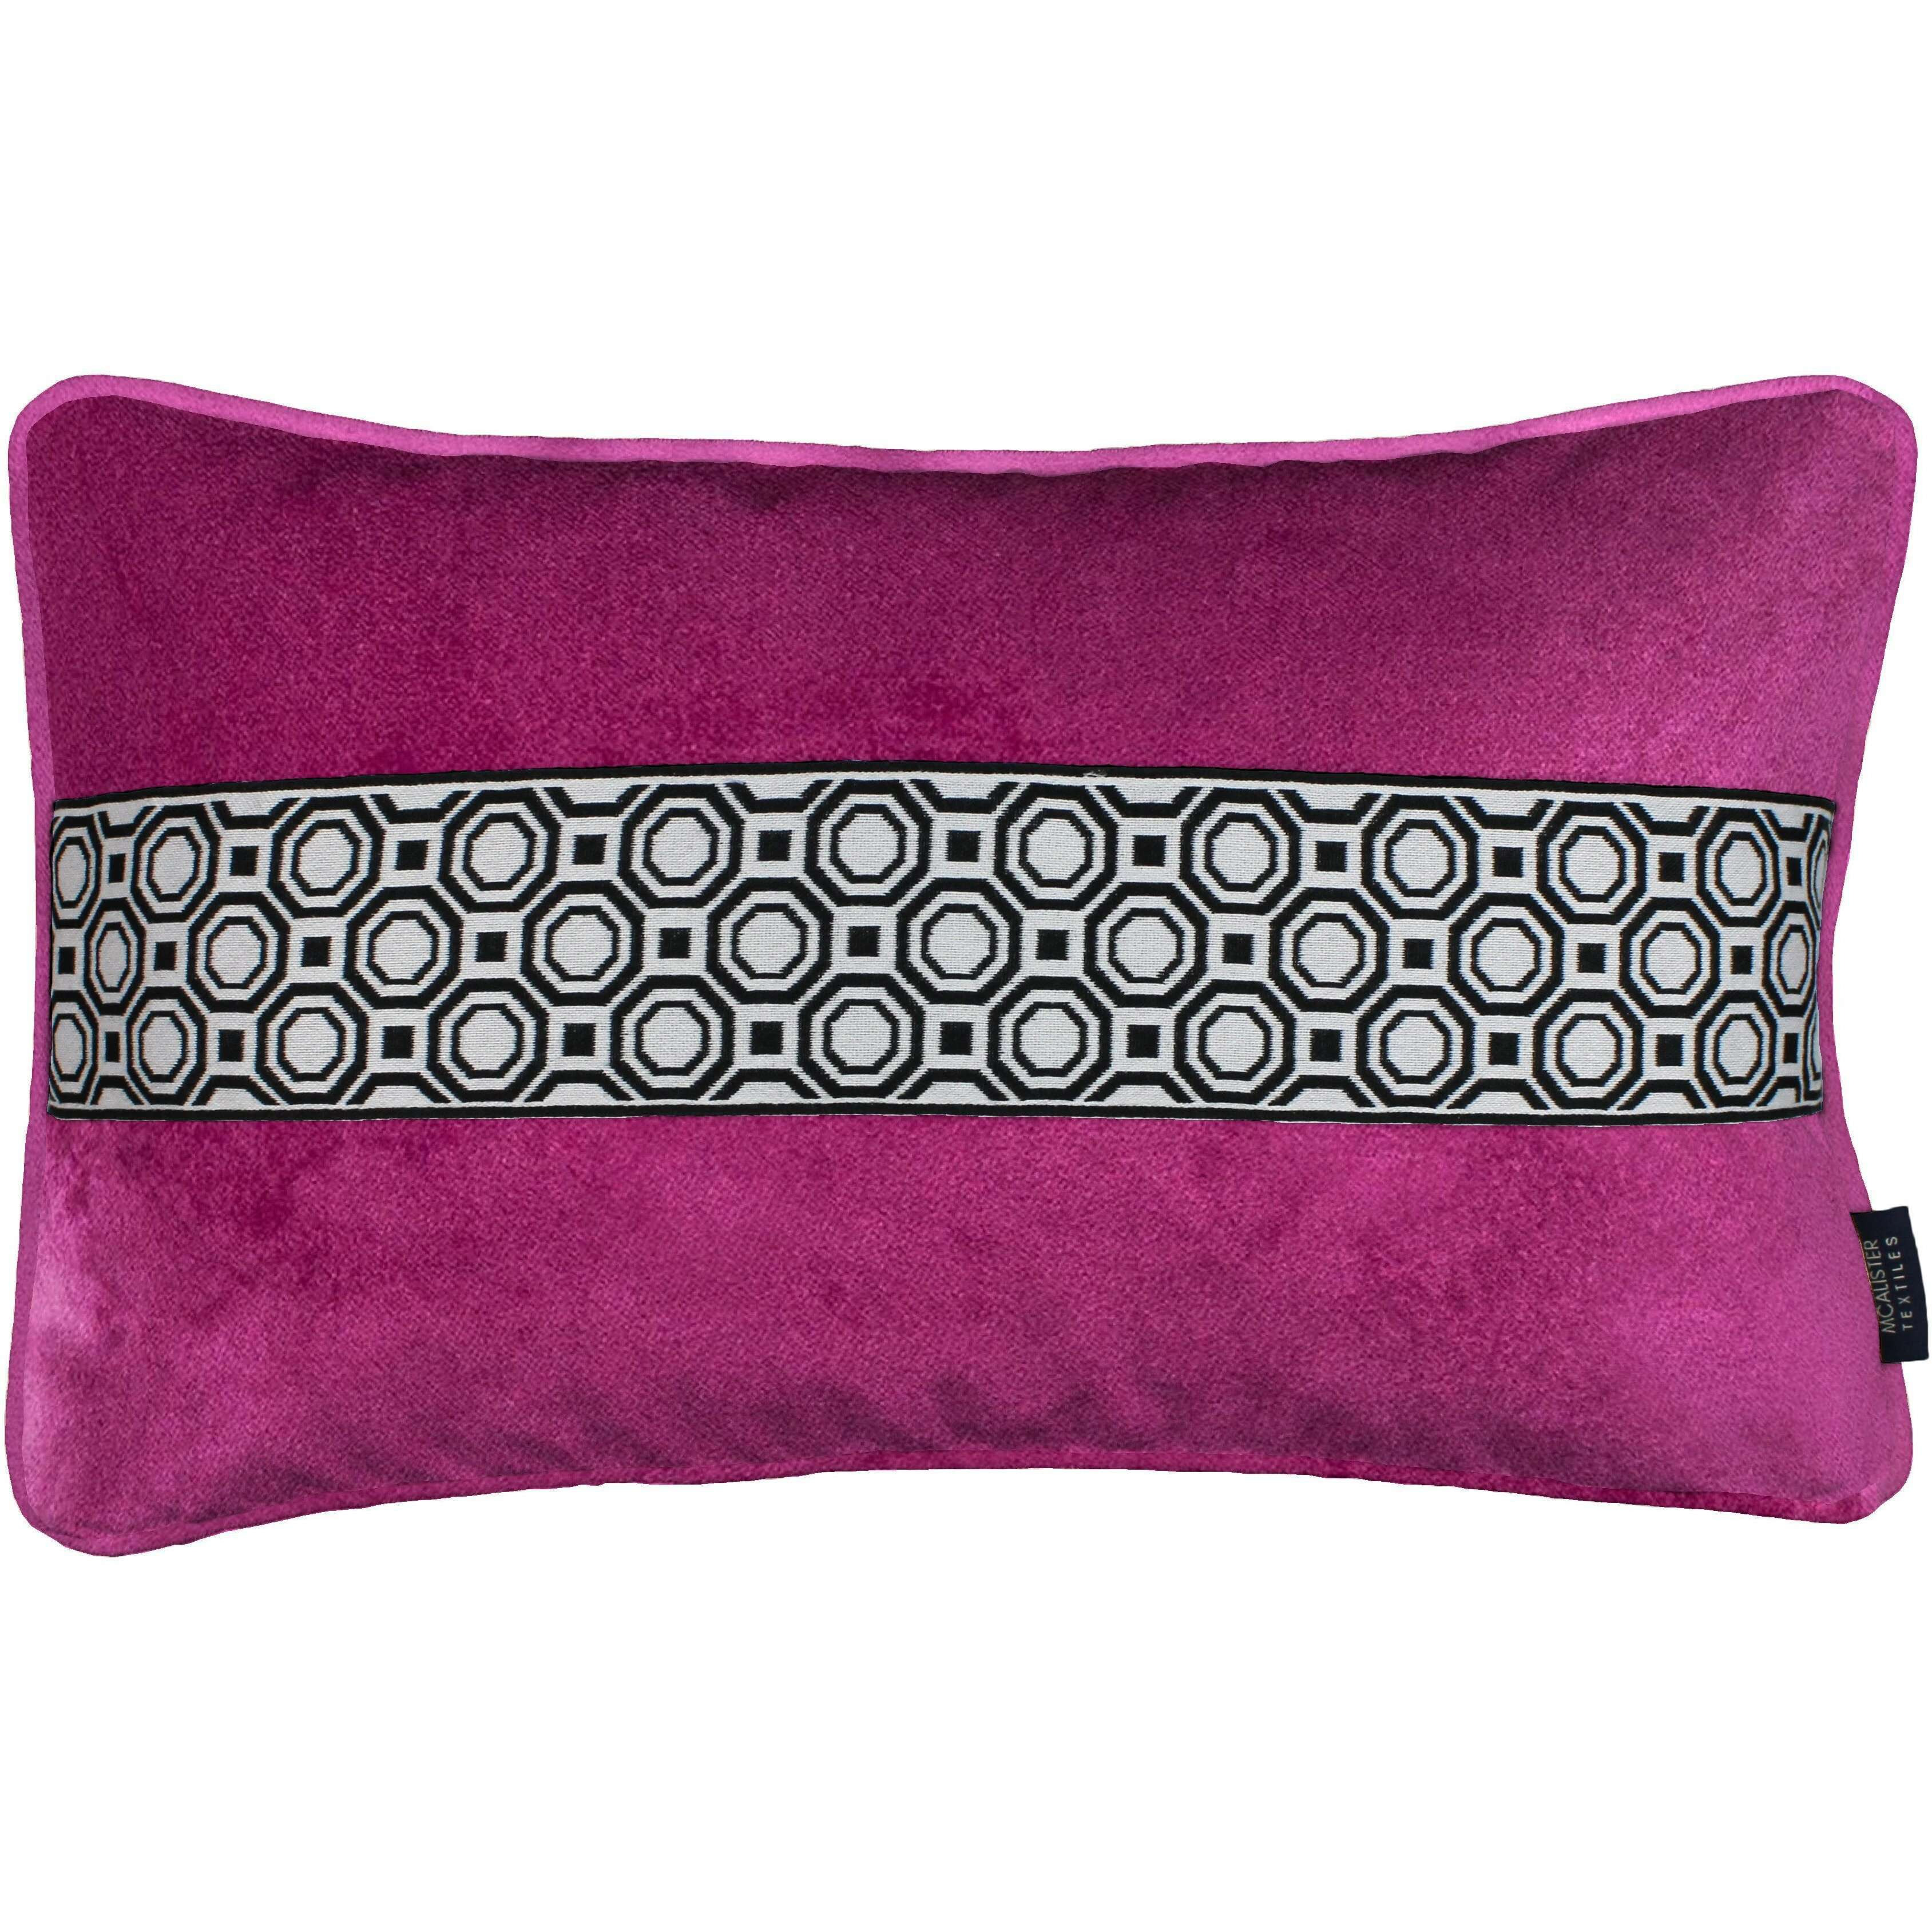 Cancun Striped Fuchsia Pink Velvet Pillow, Polyester Filler / 60cm x 40cm